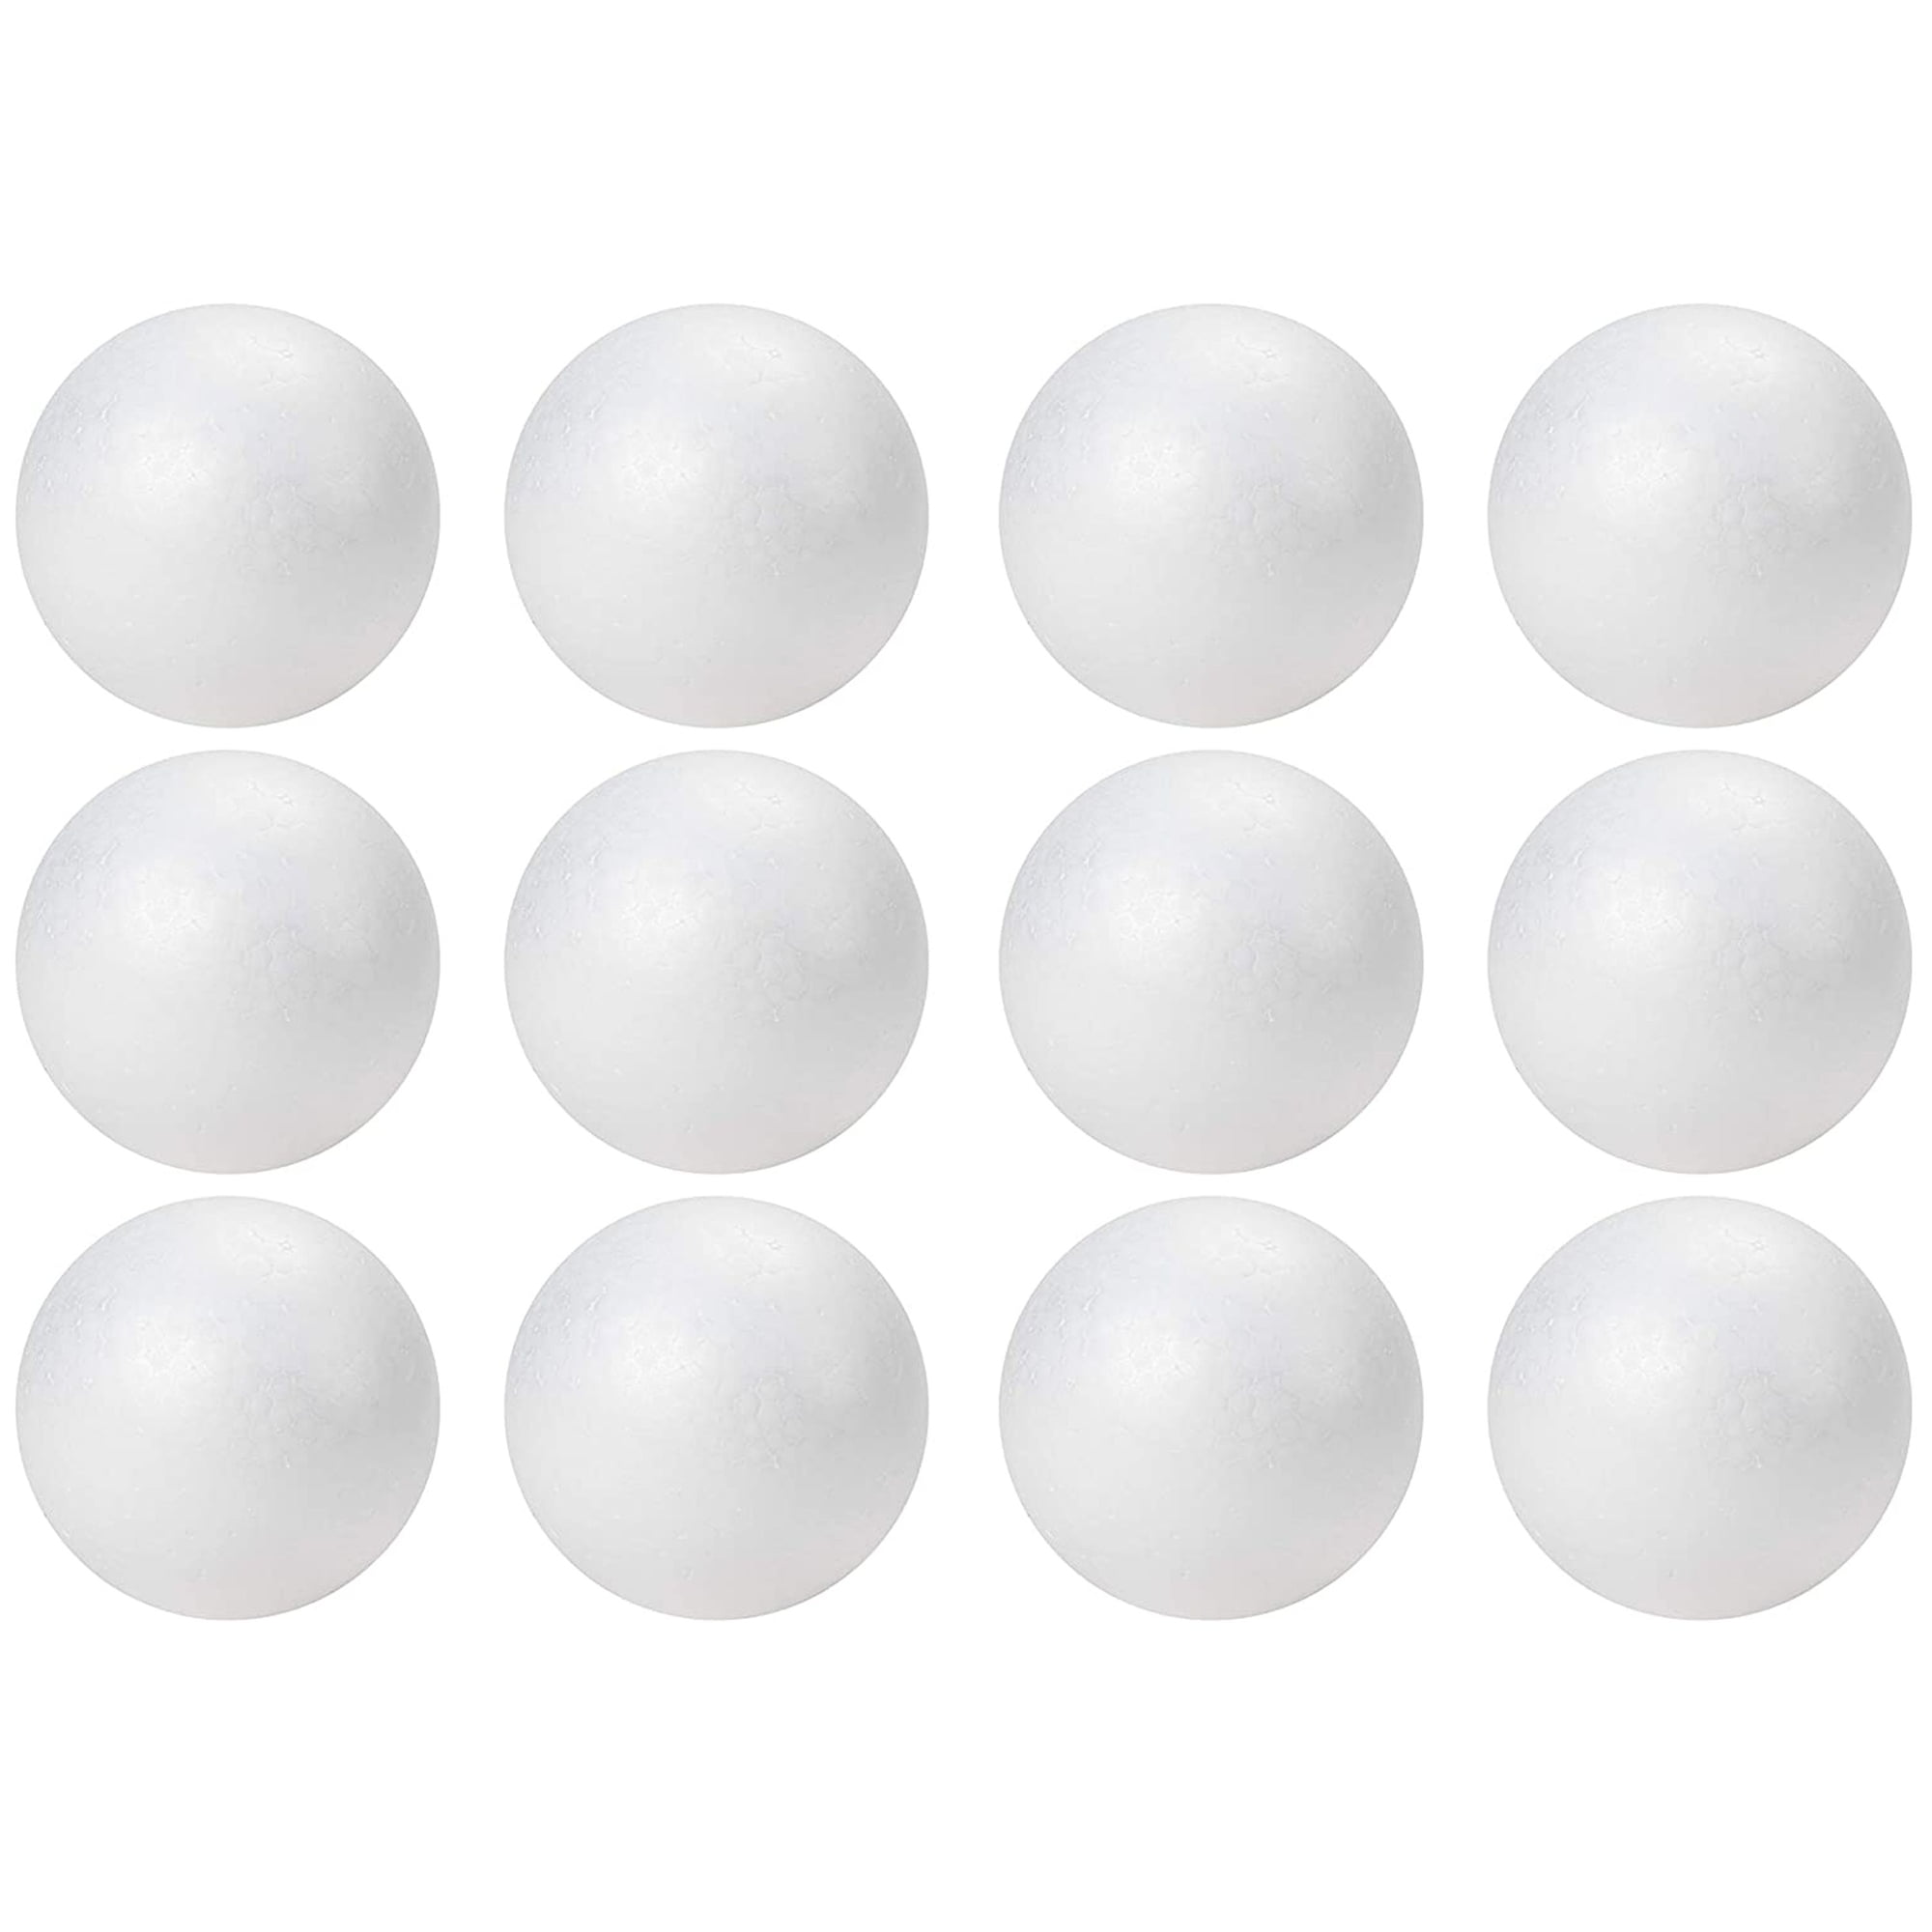 6 Inch Foam Ball,6 Pack White Polystyrene Foam Balls for Craft Making  School Solar System Project Wedding Christmas Supply